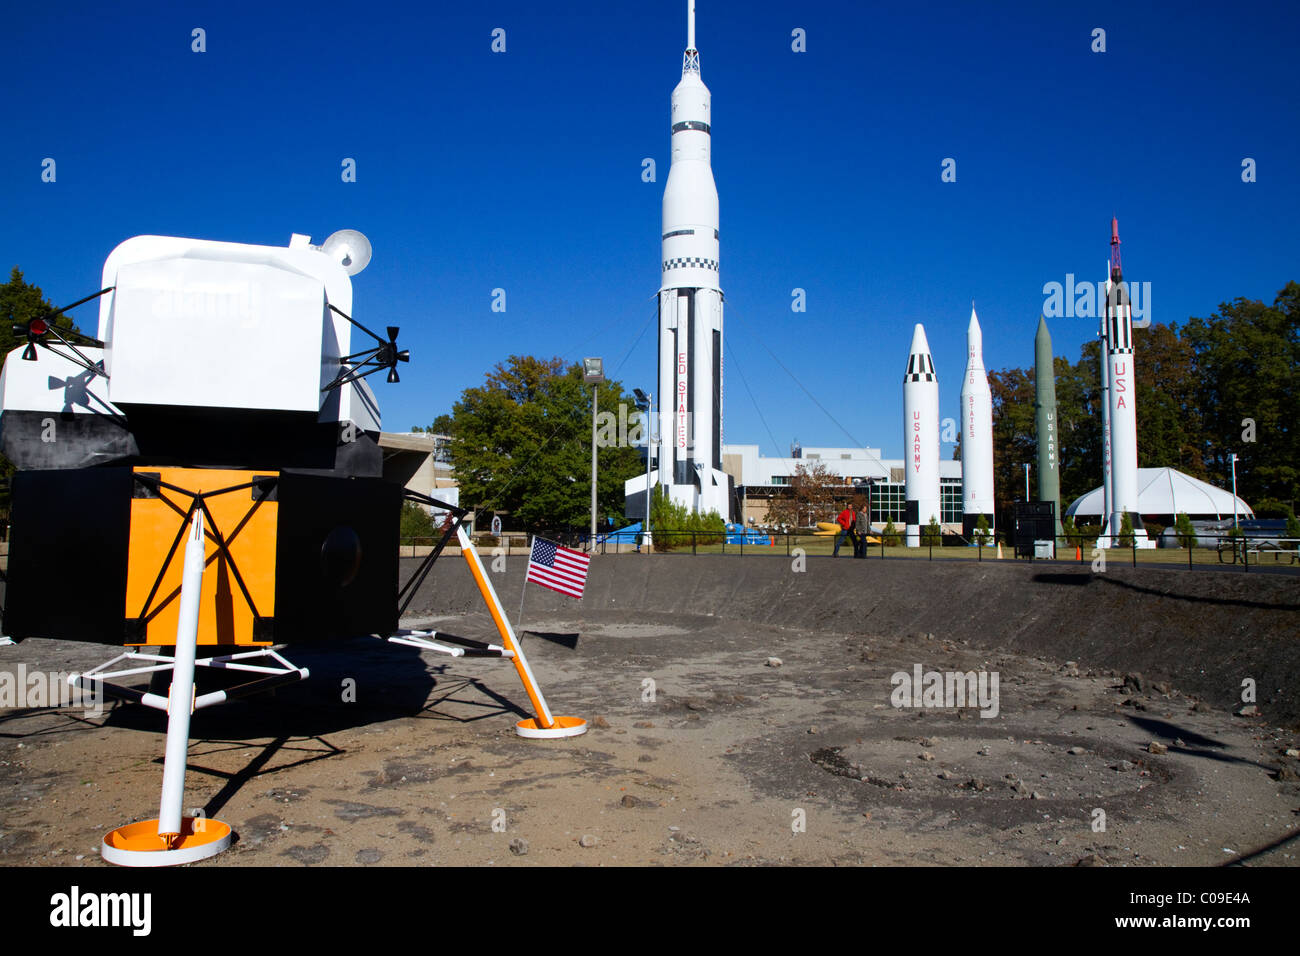 Saturn V mock-up e vari razzi sul display in Stati Uniti Spazio e Rocket Center situato a Huntsville, Alabama, Stati Uniti d'America. Foto Stock